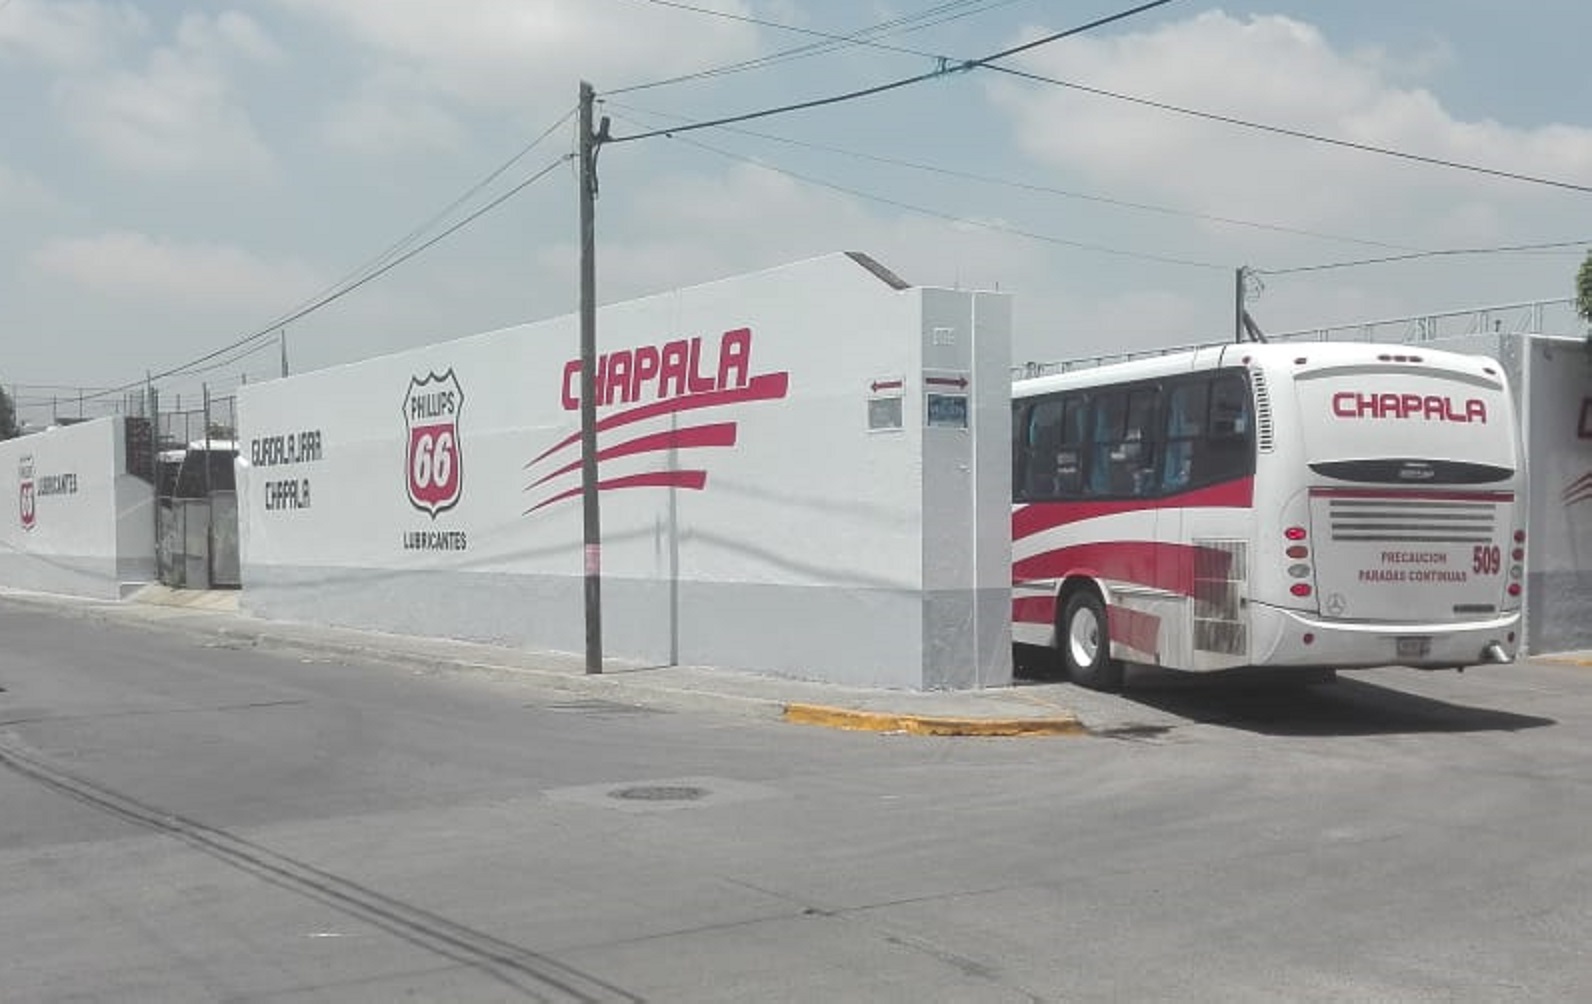 Guadalajara-Chapala